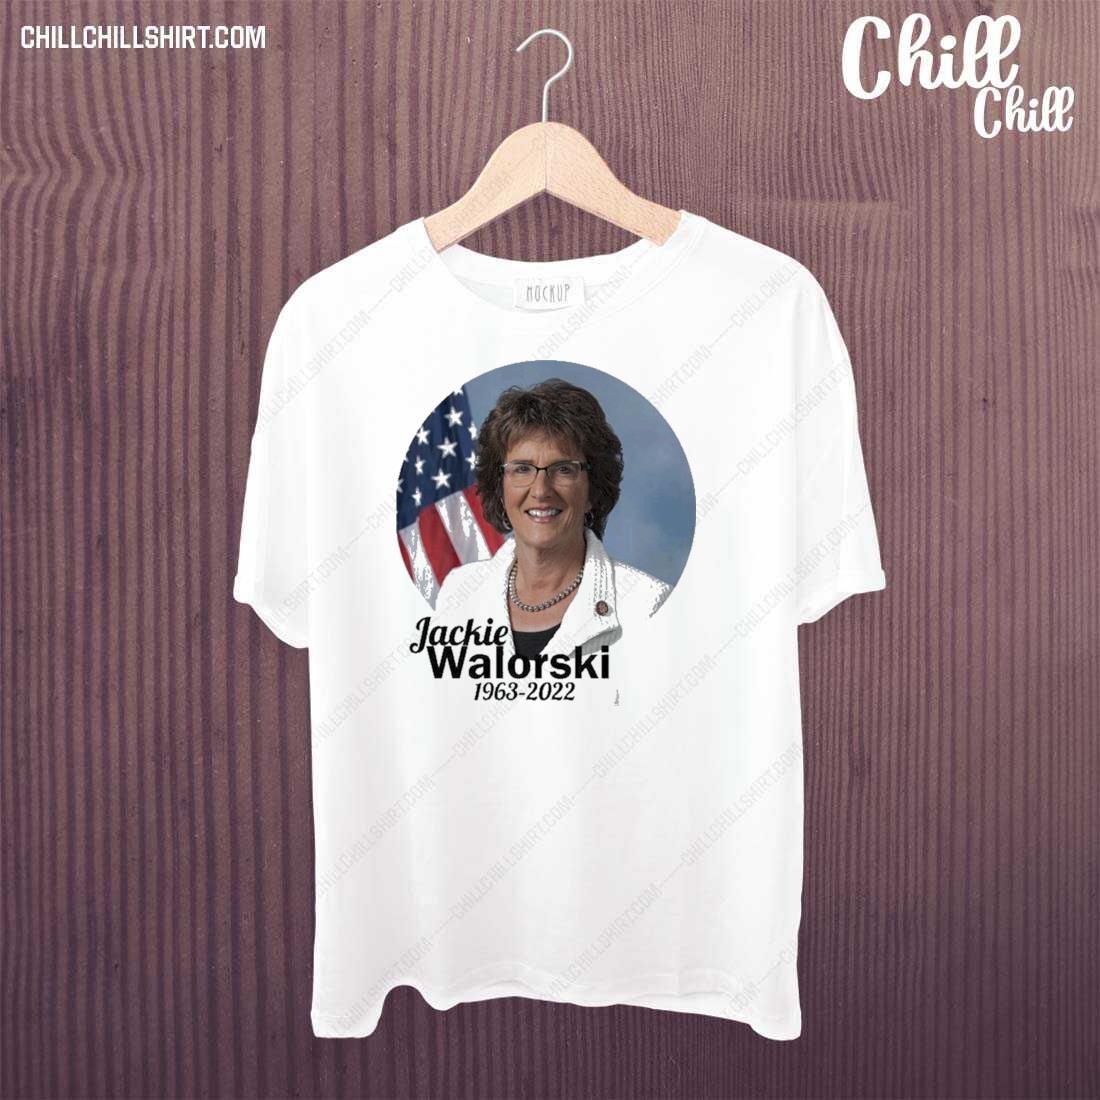 Nice rip Congresswoman Jackie Walorski Rep. Jackie Walorski 1963-2022 Shirt